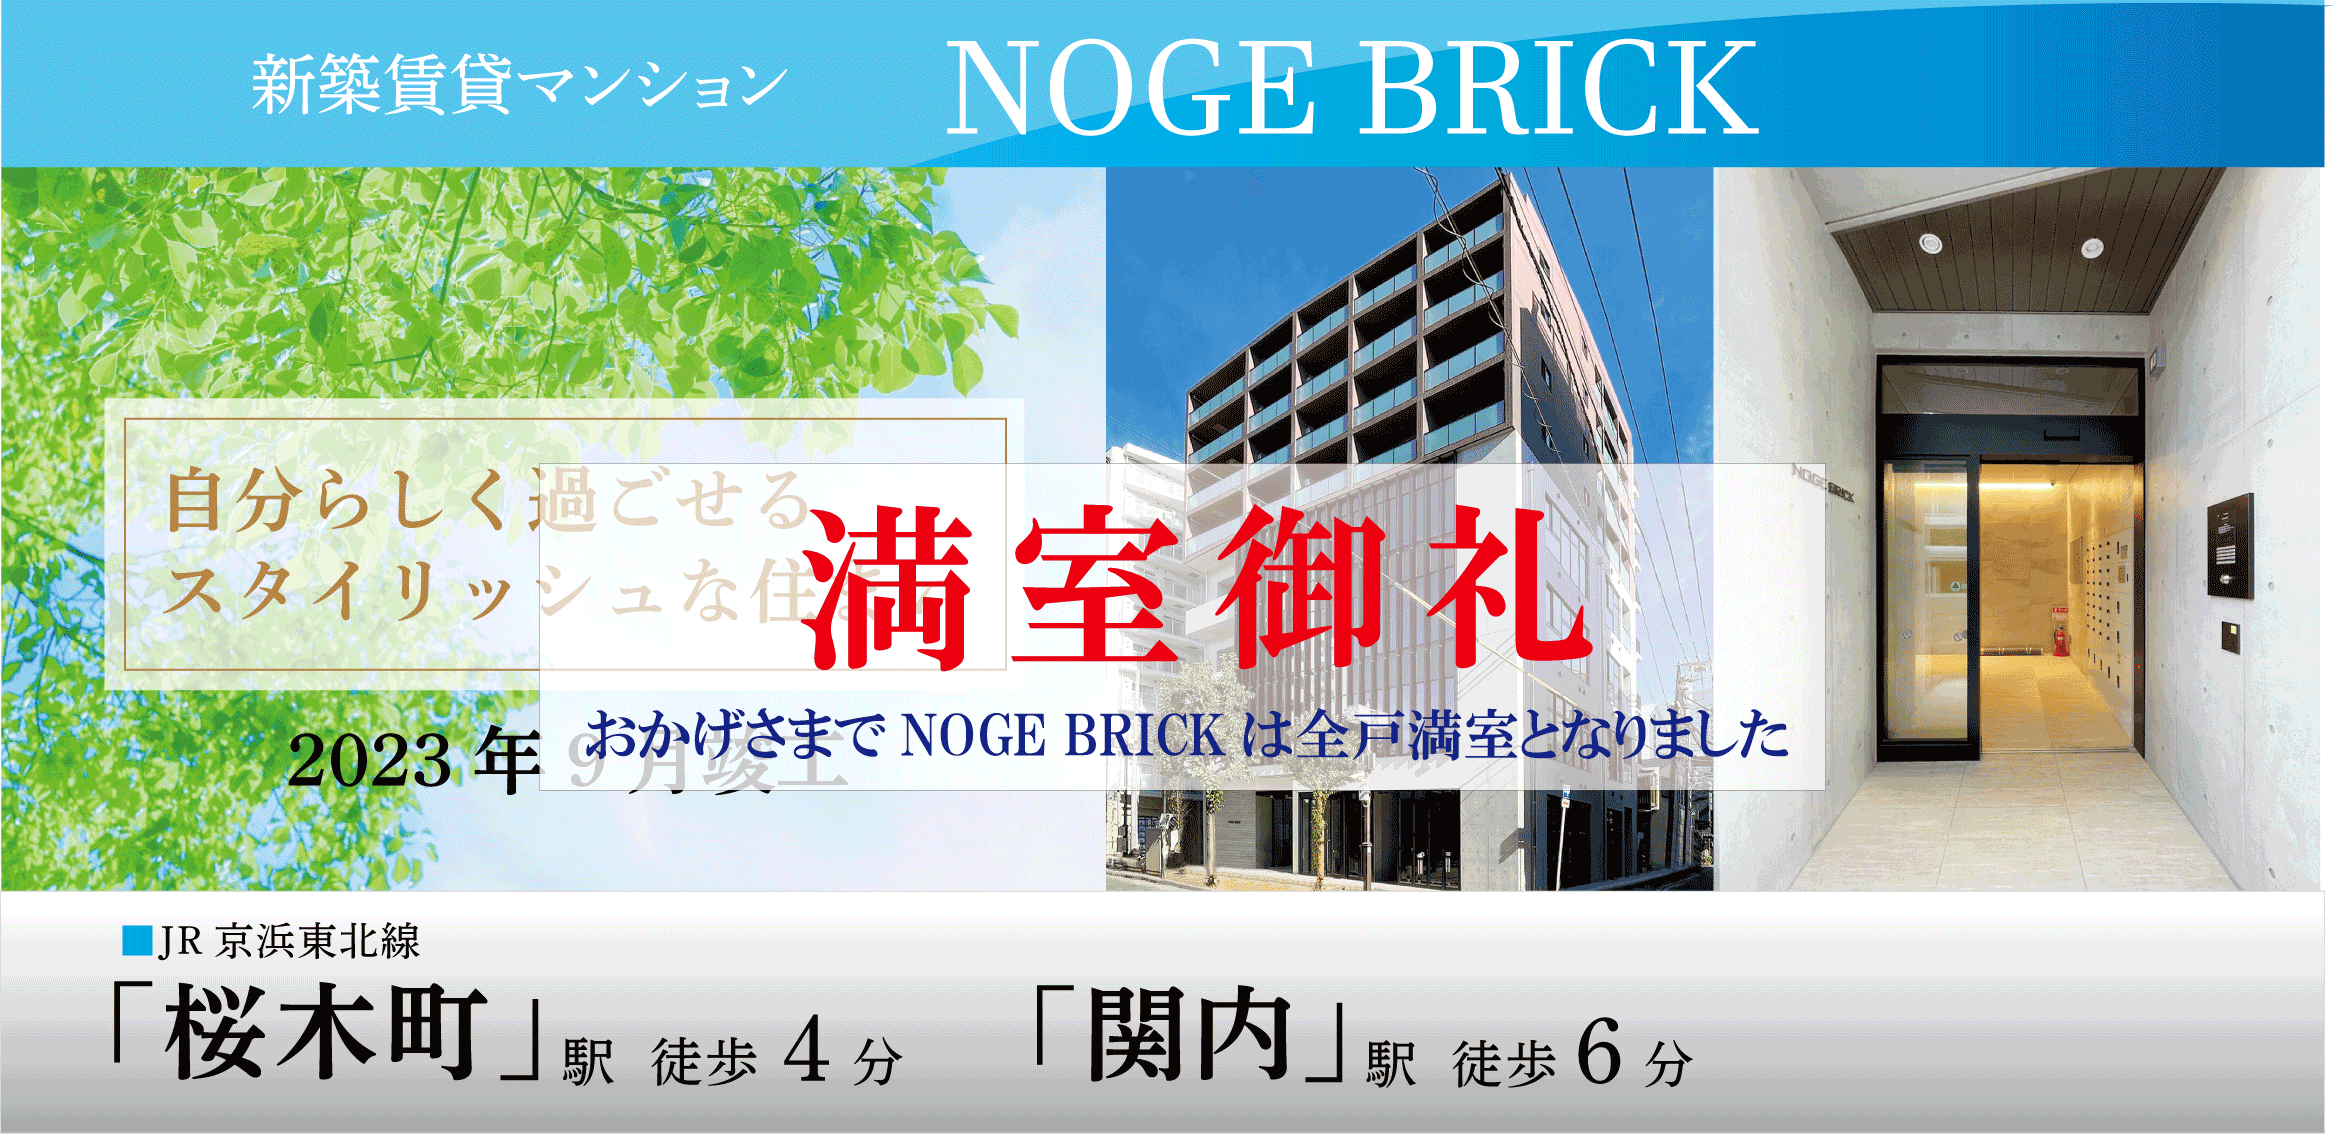 noge_brick